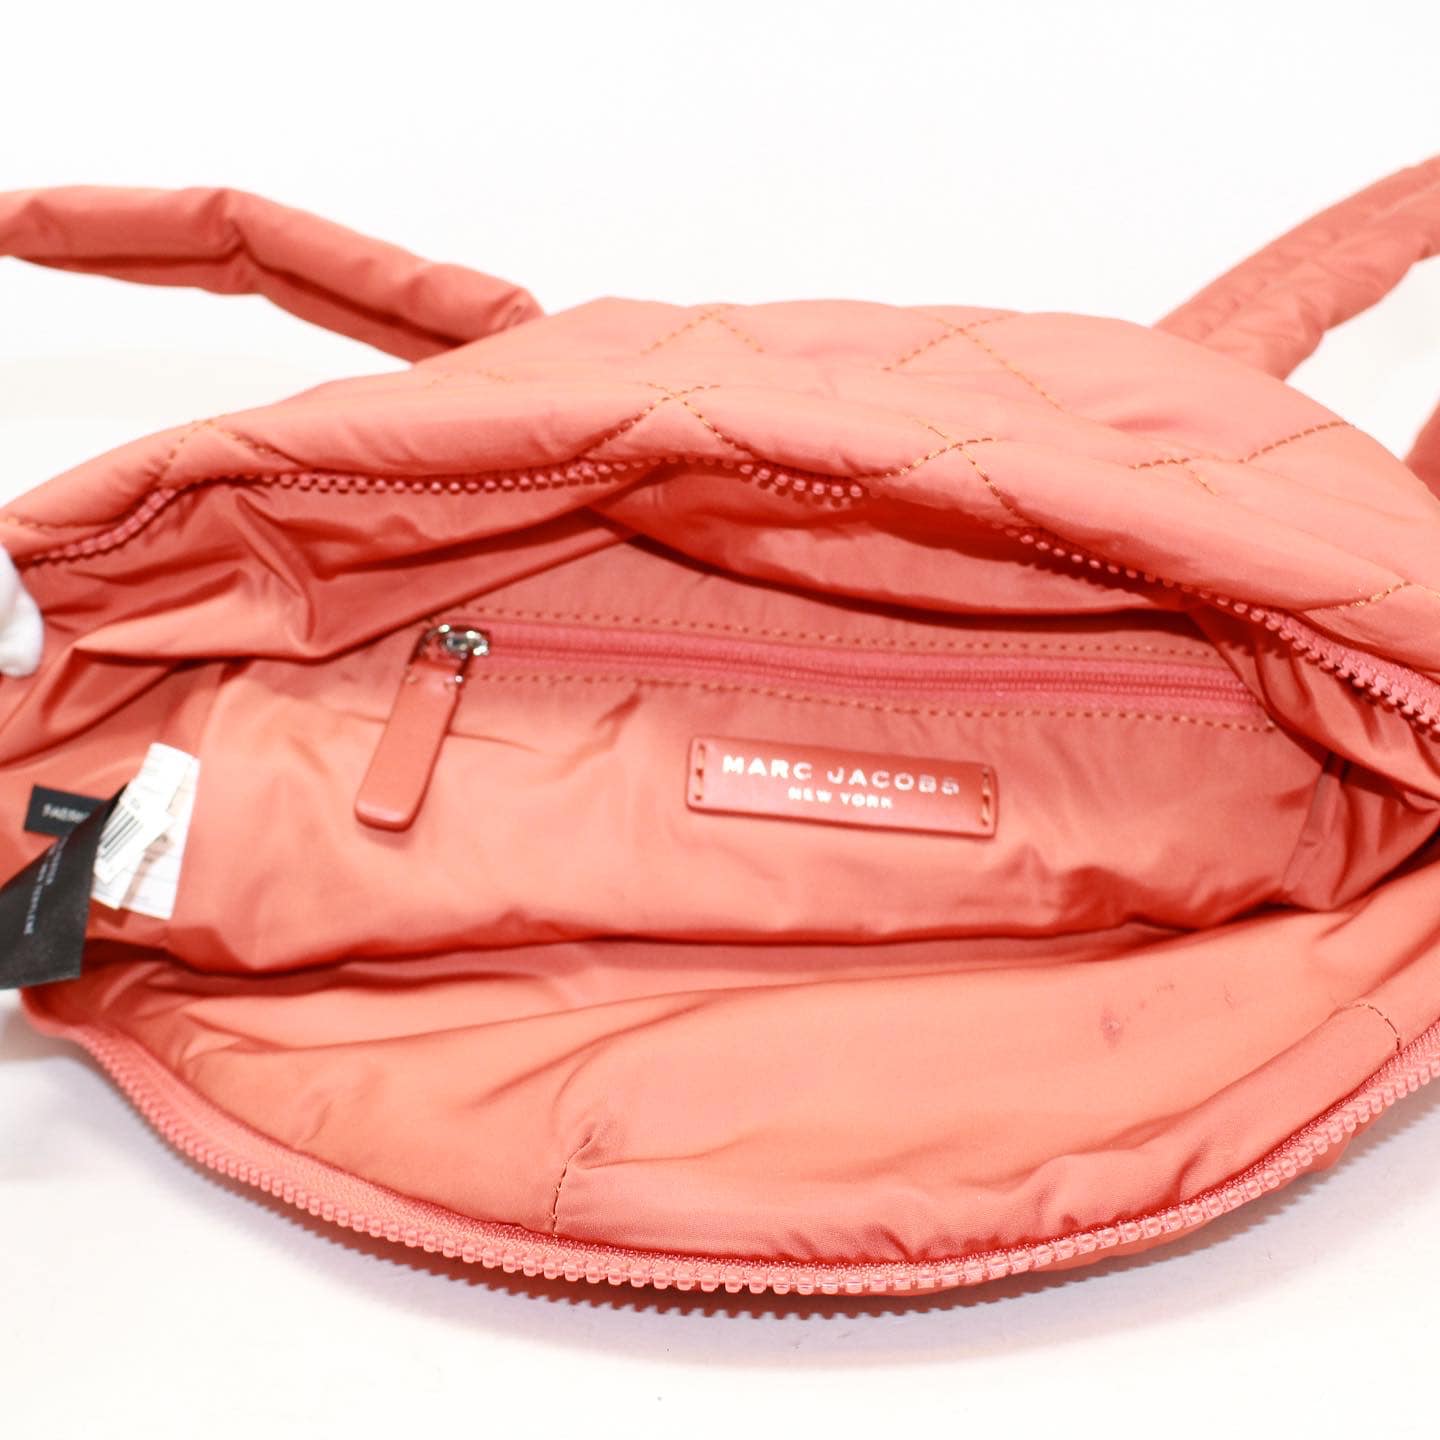 Marc Jacobs The Zipper Backpack in Orange